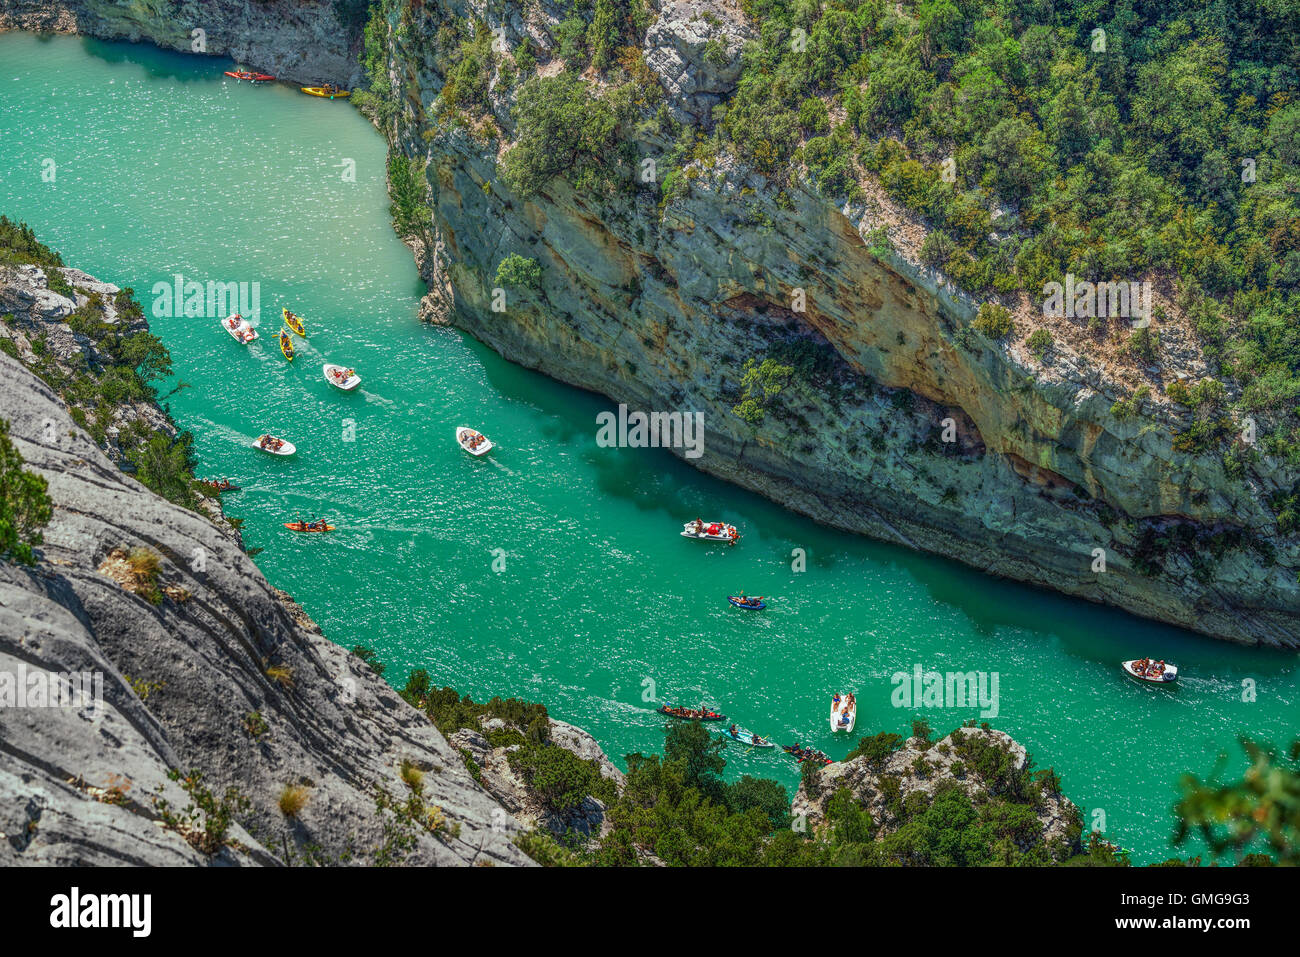 Wassersport in den Gorges du Verdon, Peddleboats, Kanu, Alpes-de-Haute-Provence, Provence-Alpes-Côte d ' Azur, Frankreich Verdon Regio Stockfoto